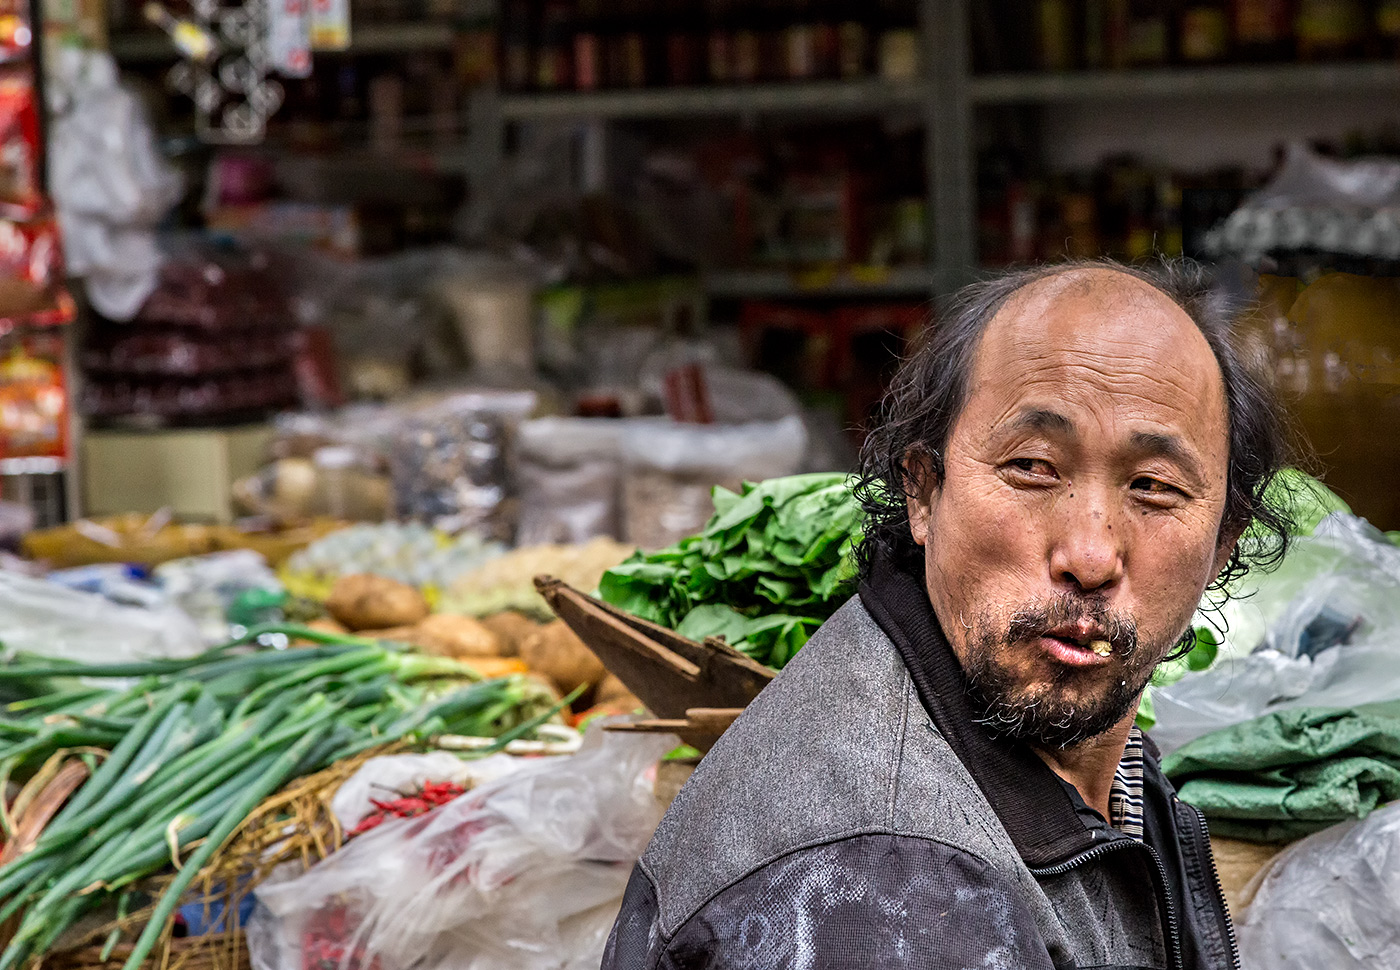 Verkäufer auf dem Markt in Kunming